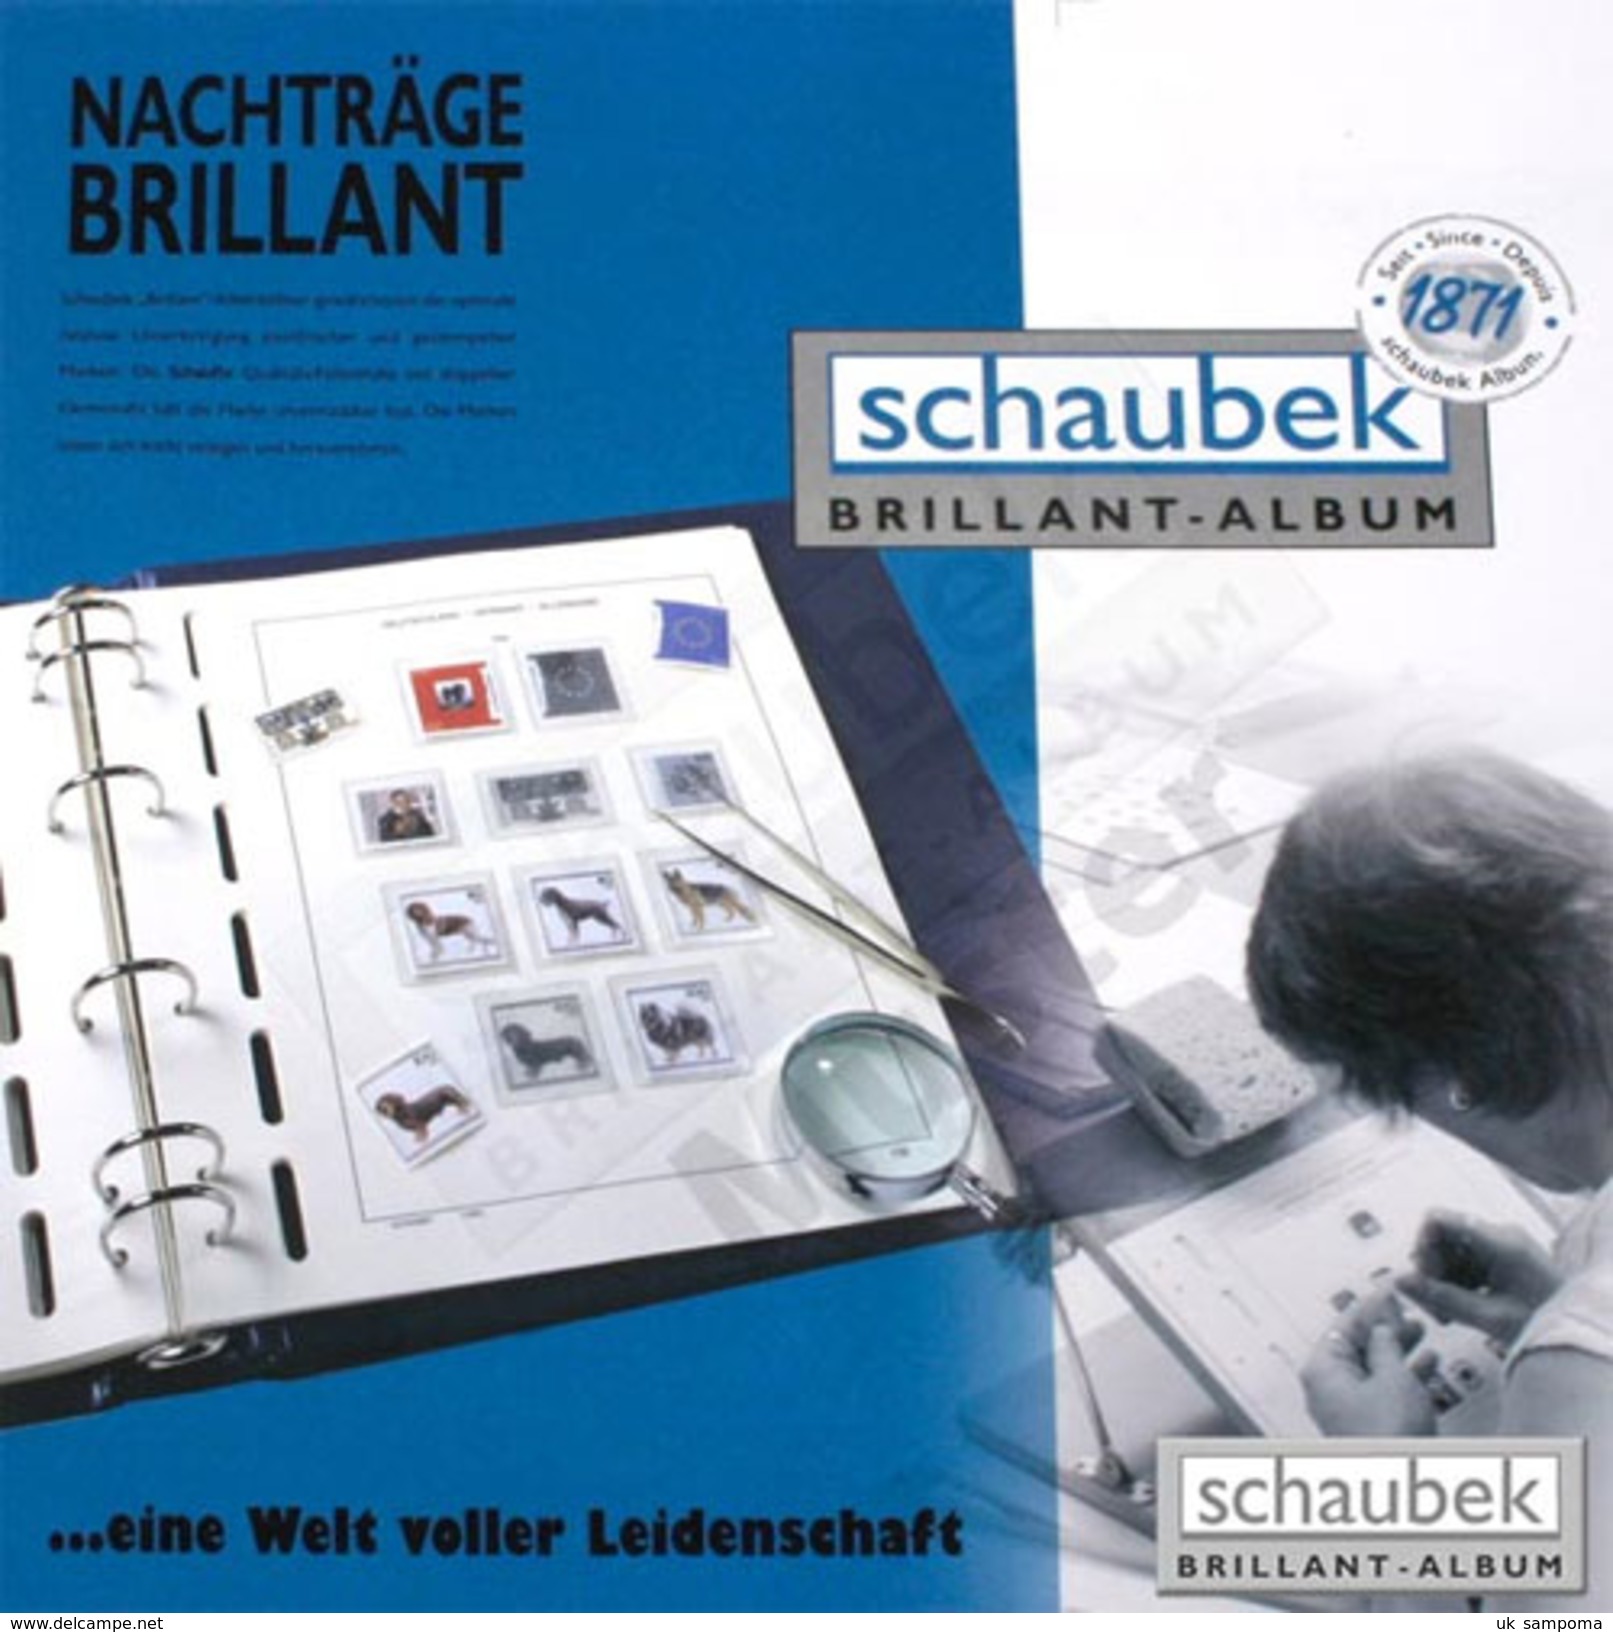 Schaubek A-822/09B Album Hungary 2010-2014 Brillant, In A Blue Screw Post Binder, Vol. IX, Without Slipcase - Komplettalben